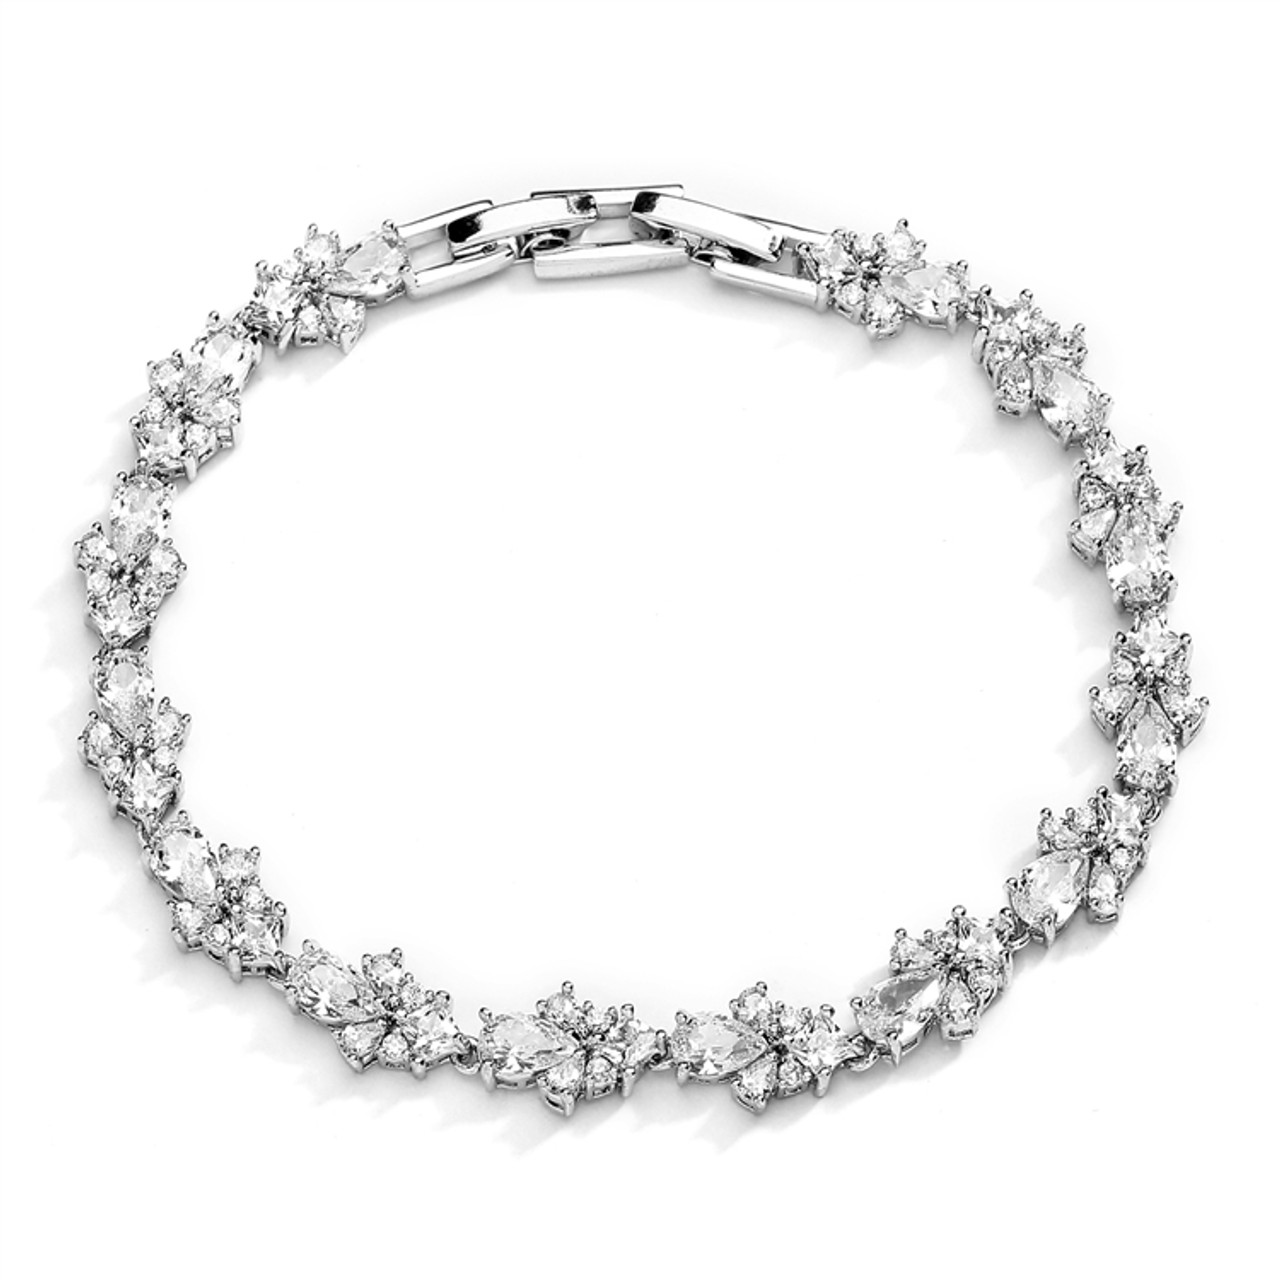 Mariell Bridals Top Selling CZ Wedding Bridal & Prom Tennis Bracelet 7